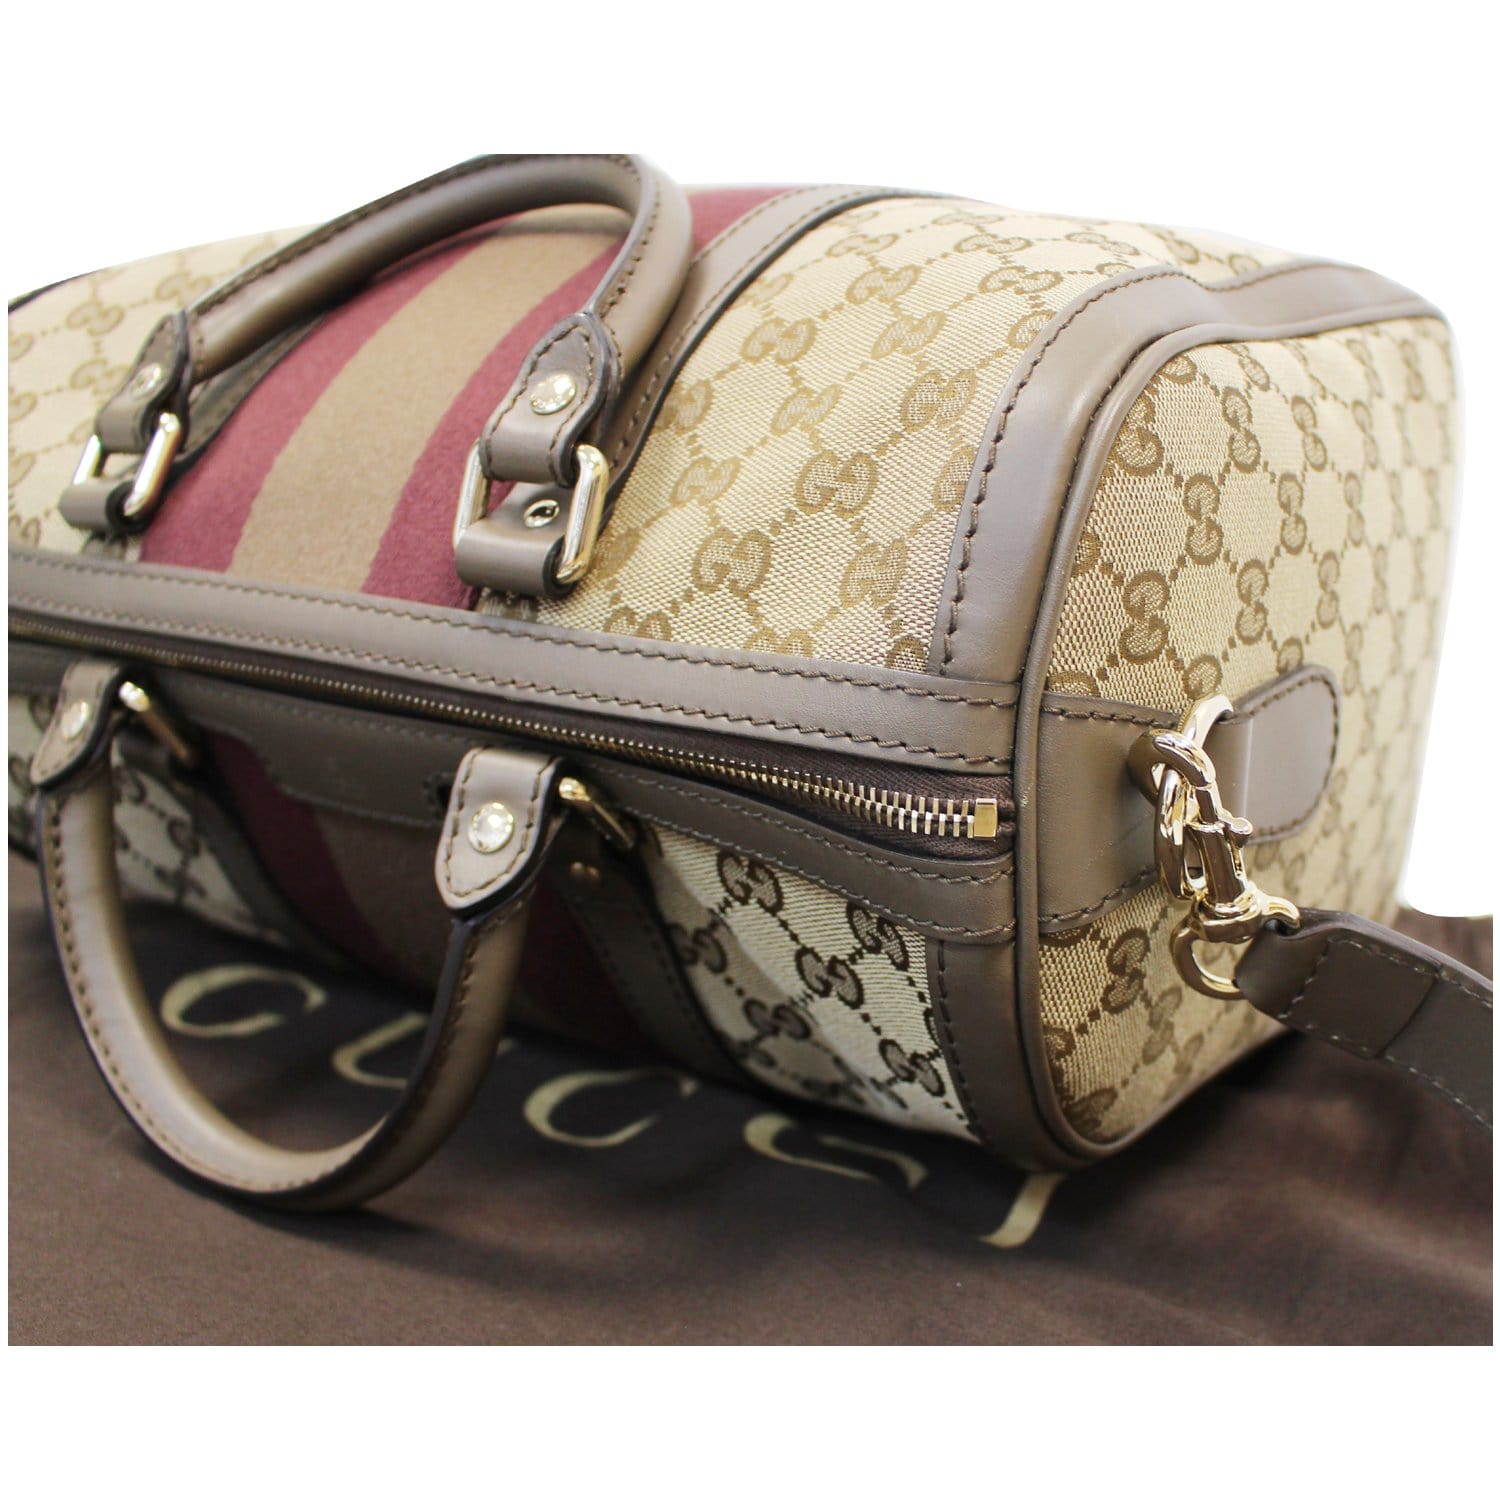 Gucci, Bags, Authentic Gucci Speedy Purse